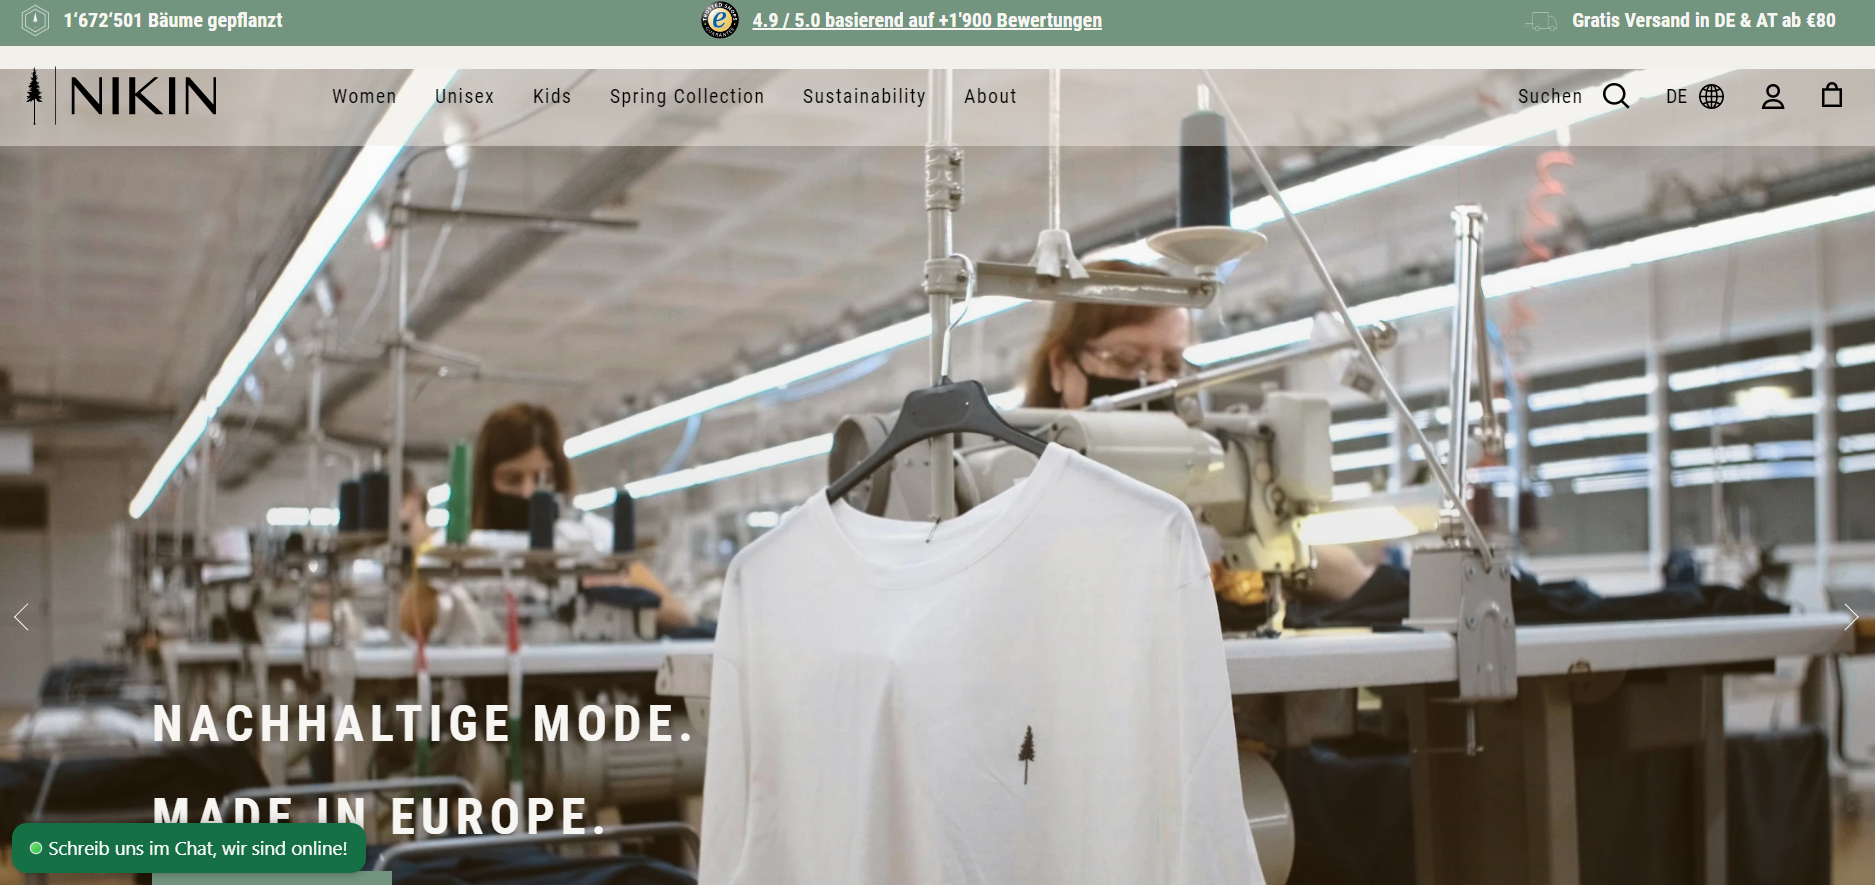 Die Website des Fashion E-Commerce NIKIN. 